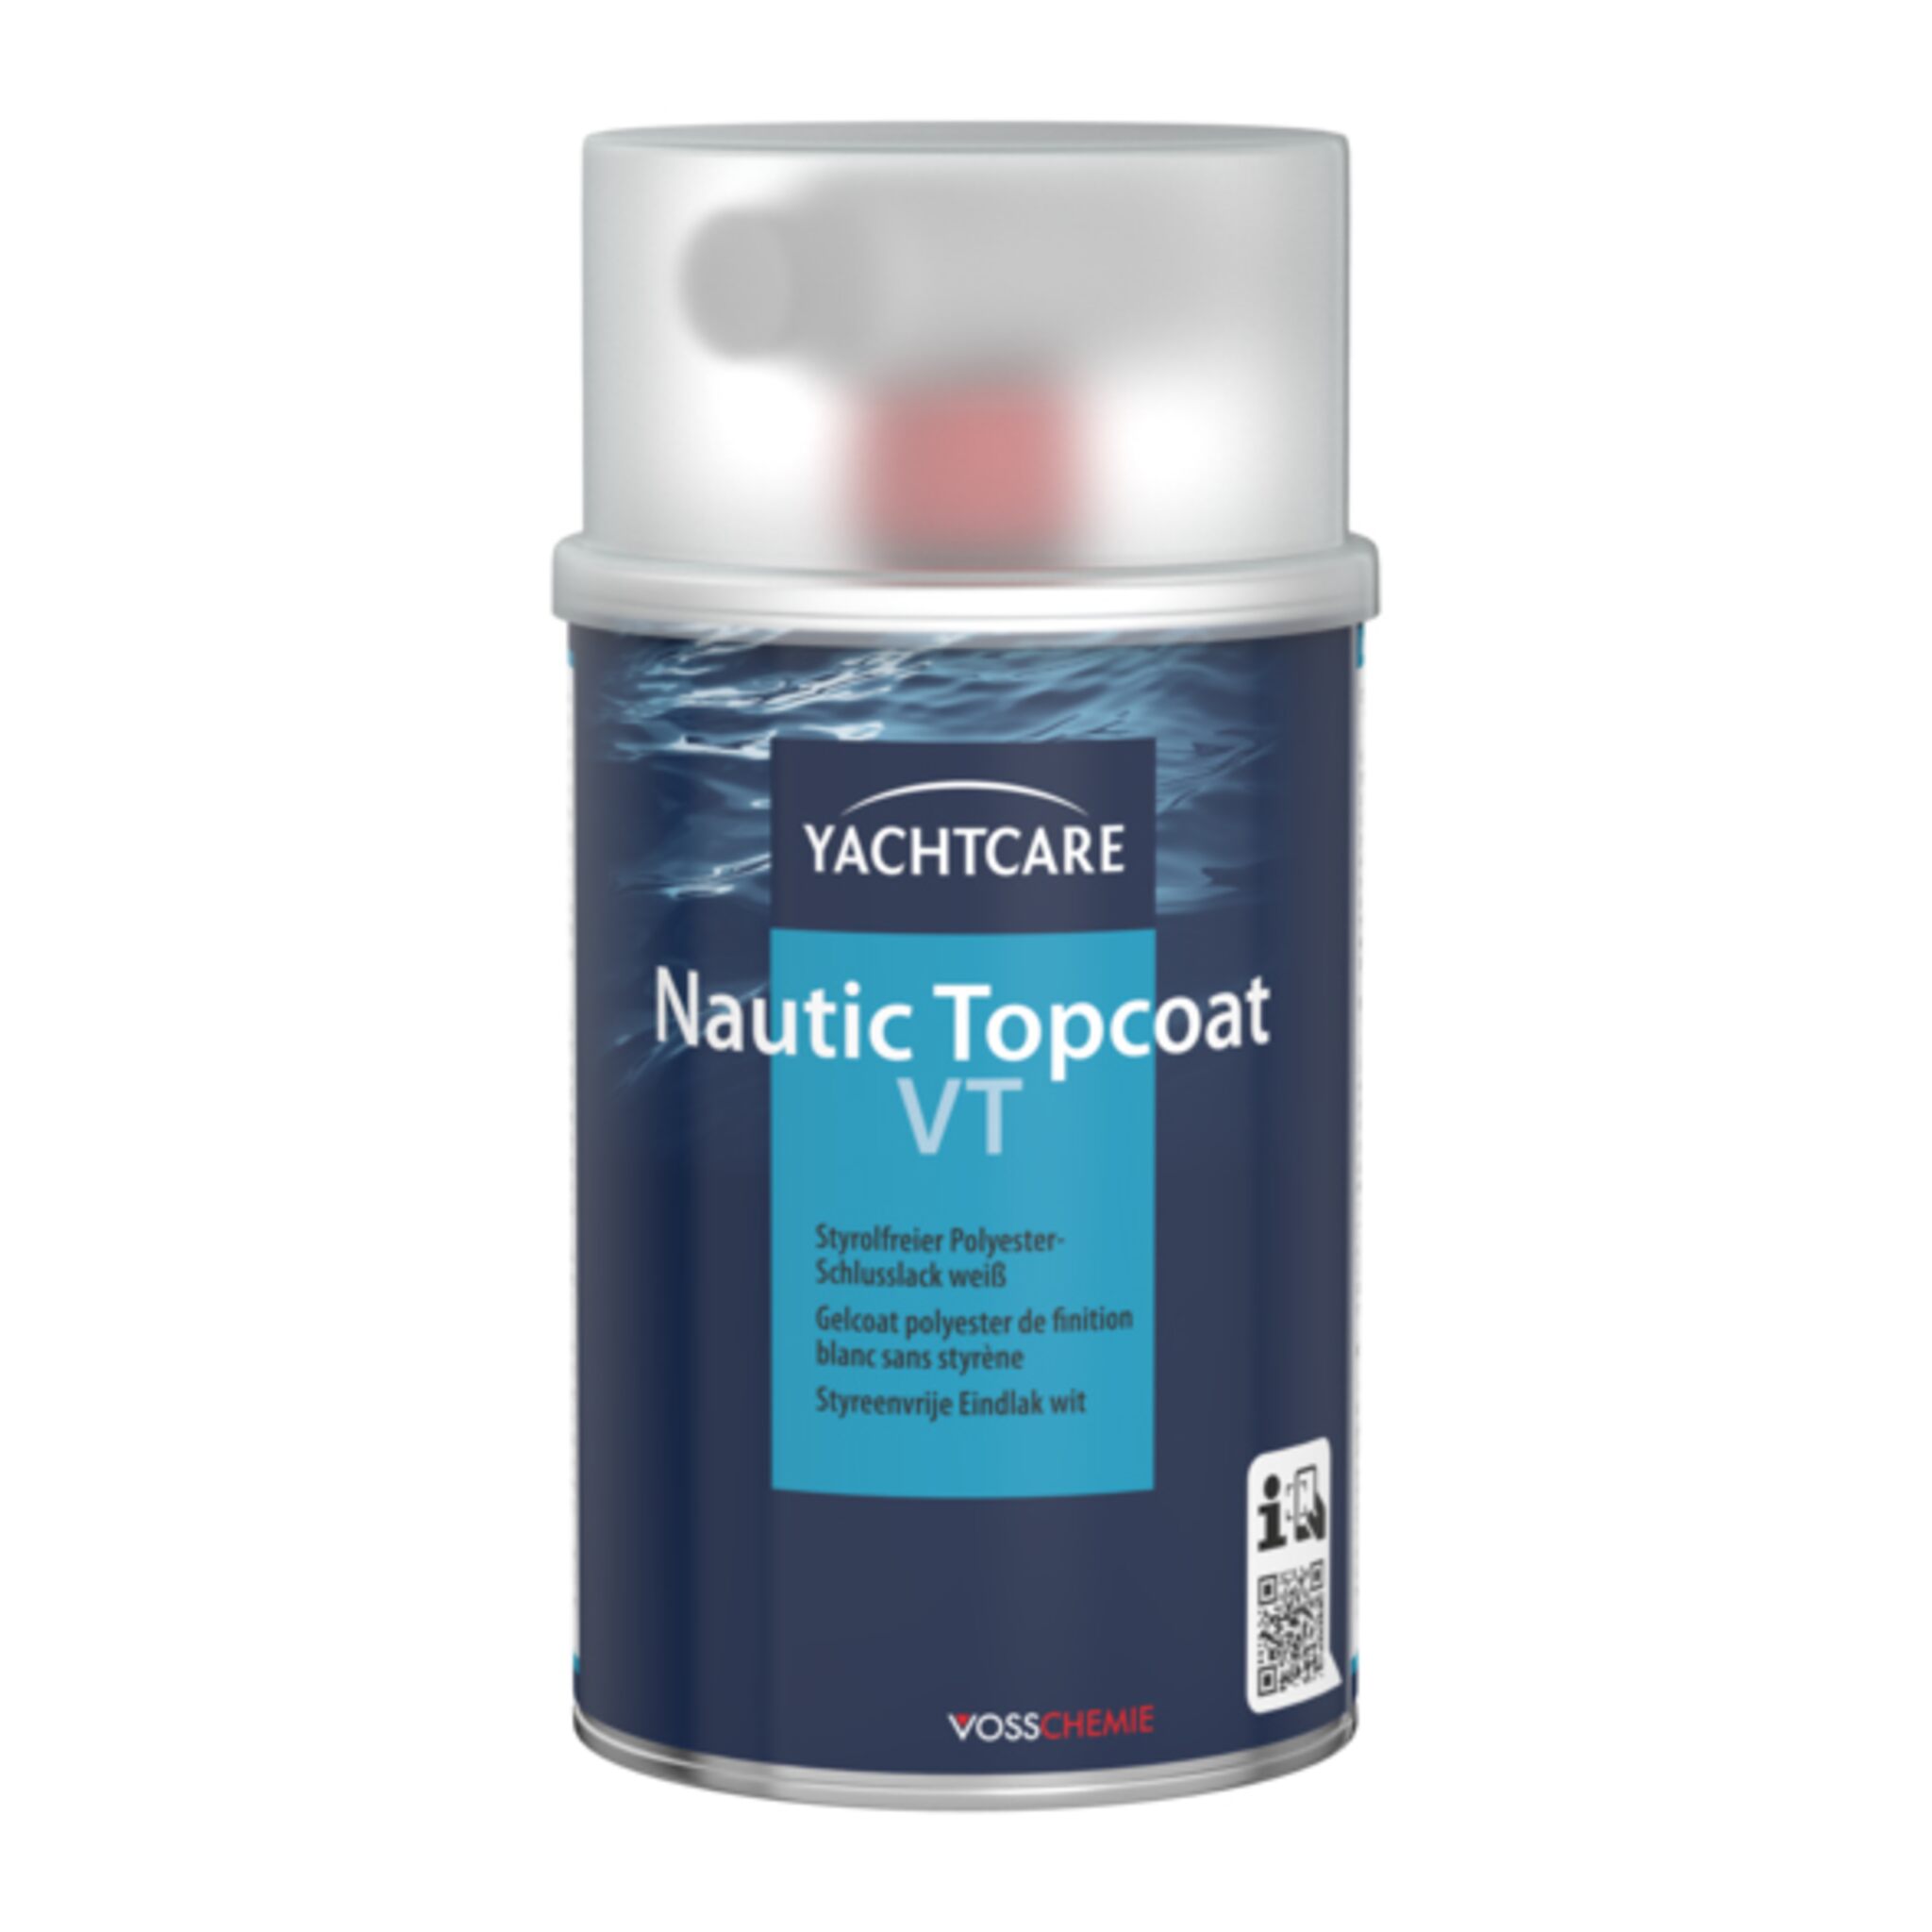 Yachtcare Topcoat Nautic Topcoat VT